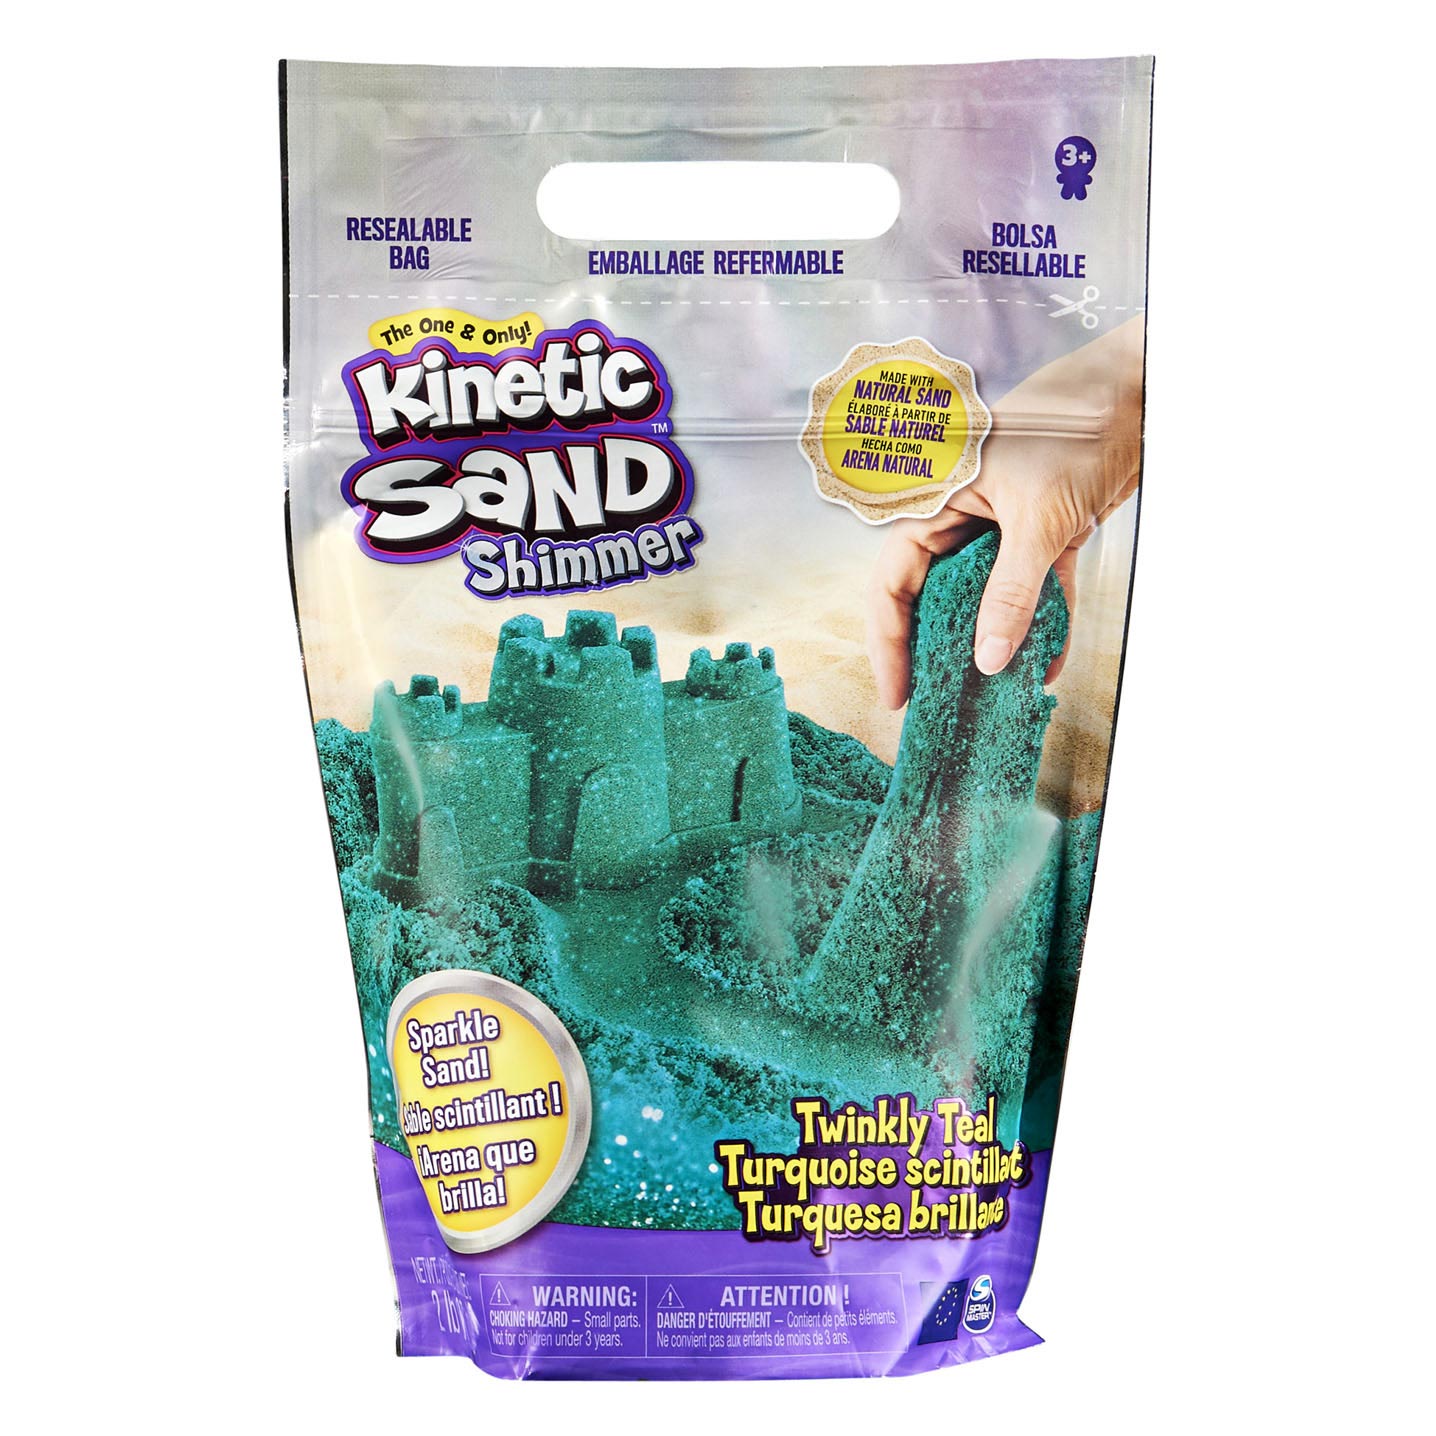 Kinetic Sand - Glitter Blauwgroen, 907gr.